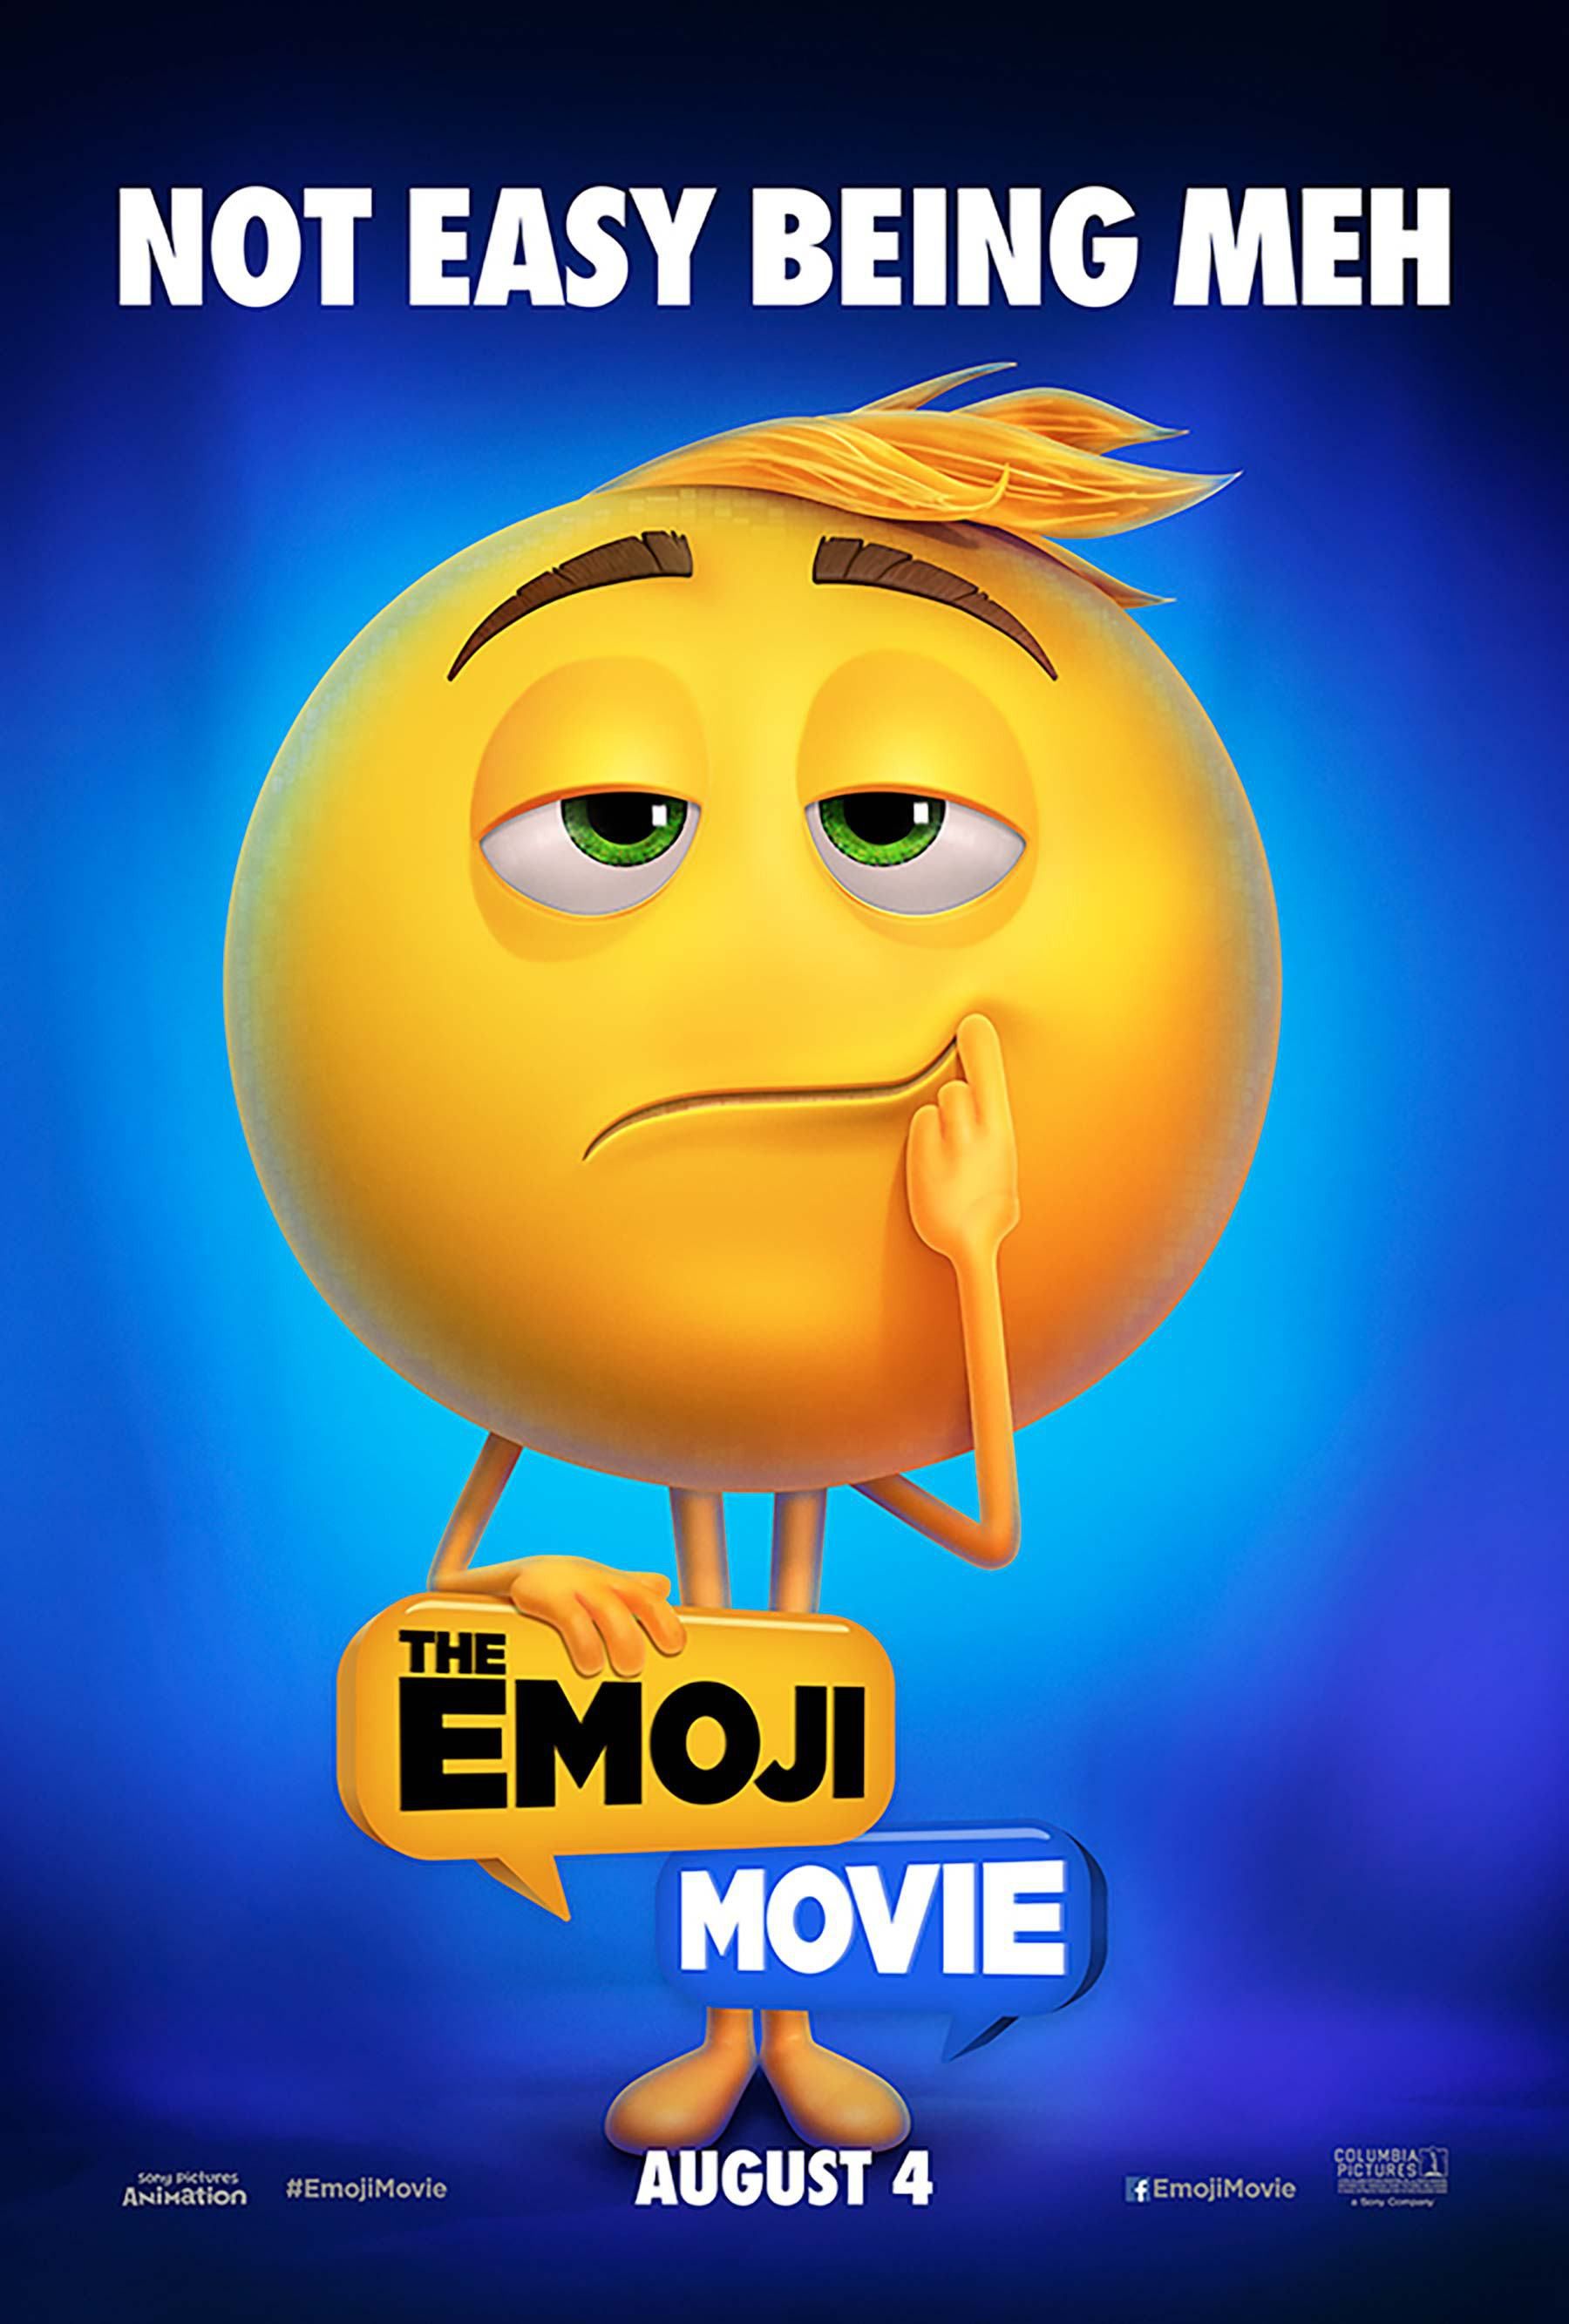 The Emoji Movie Meh poster